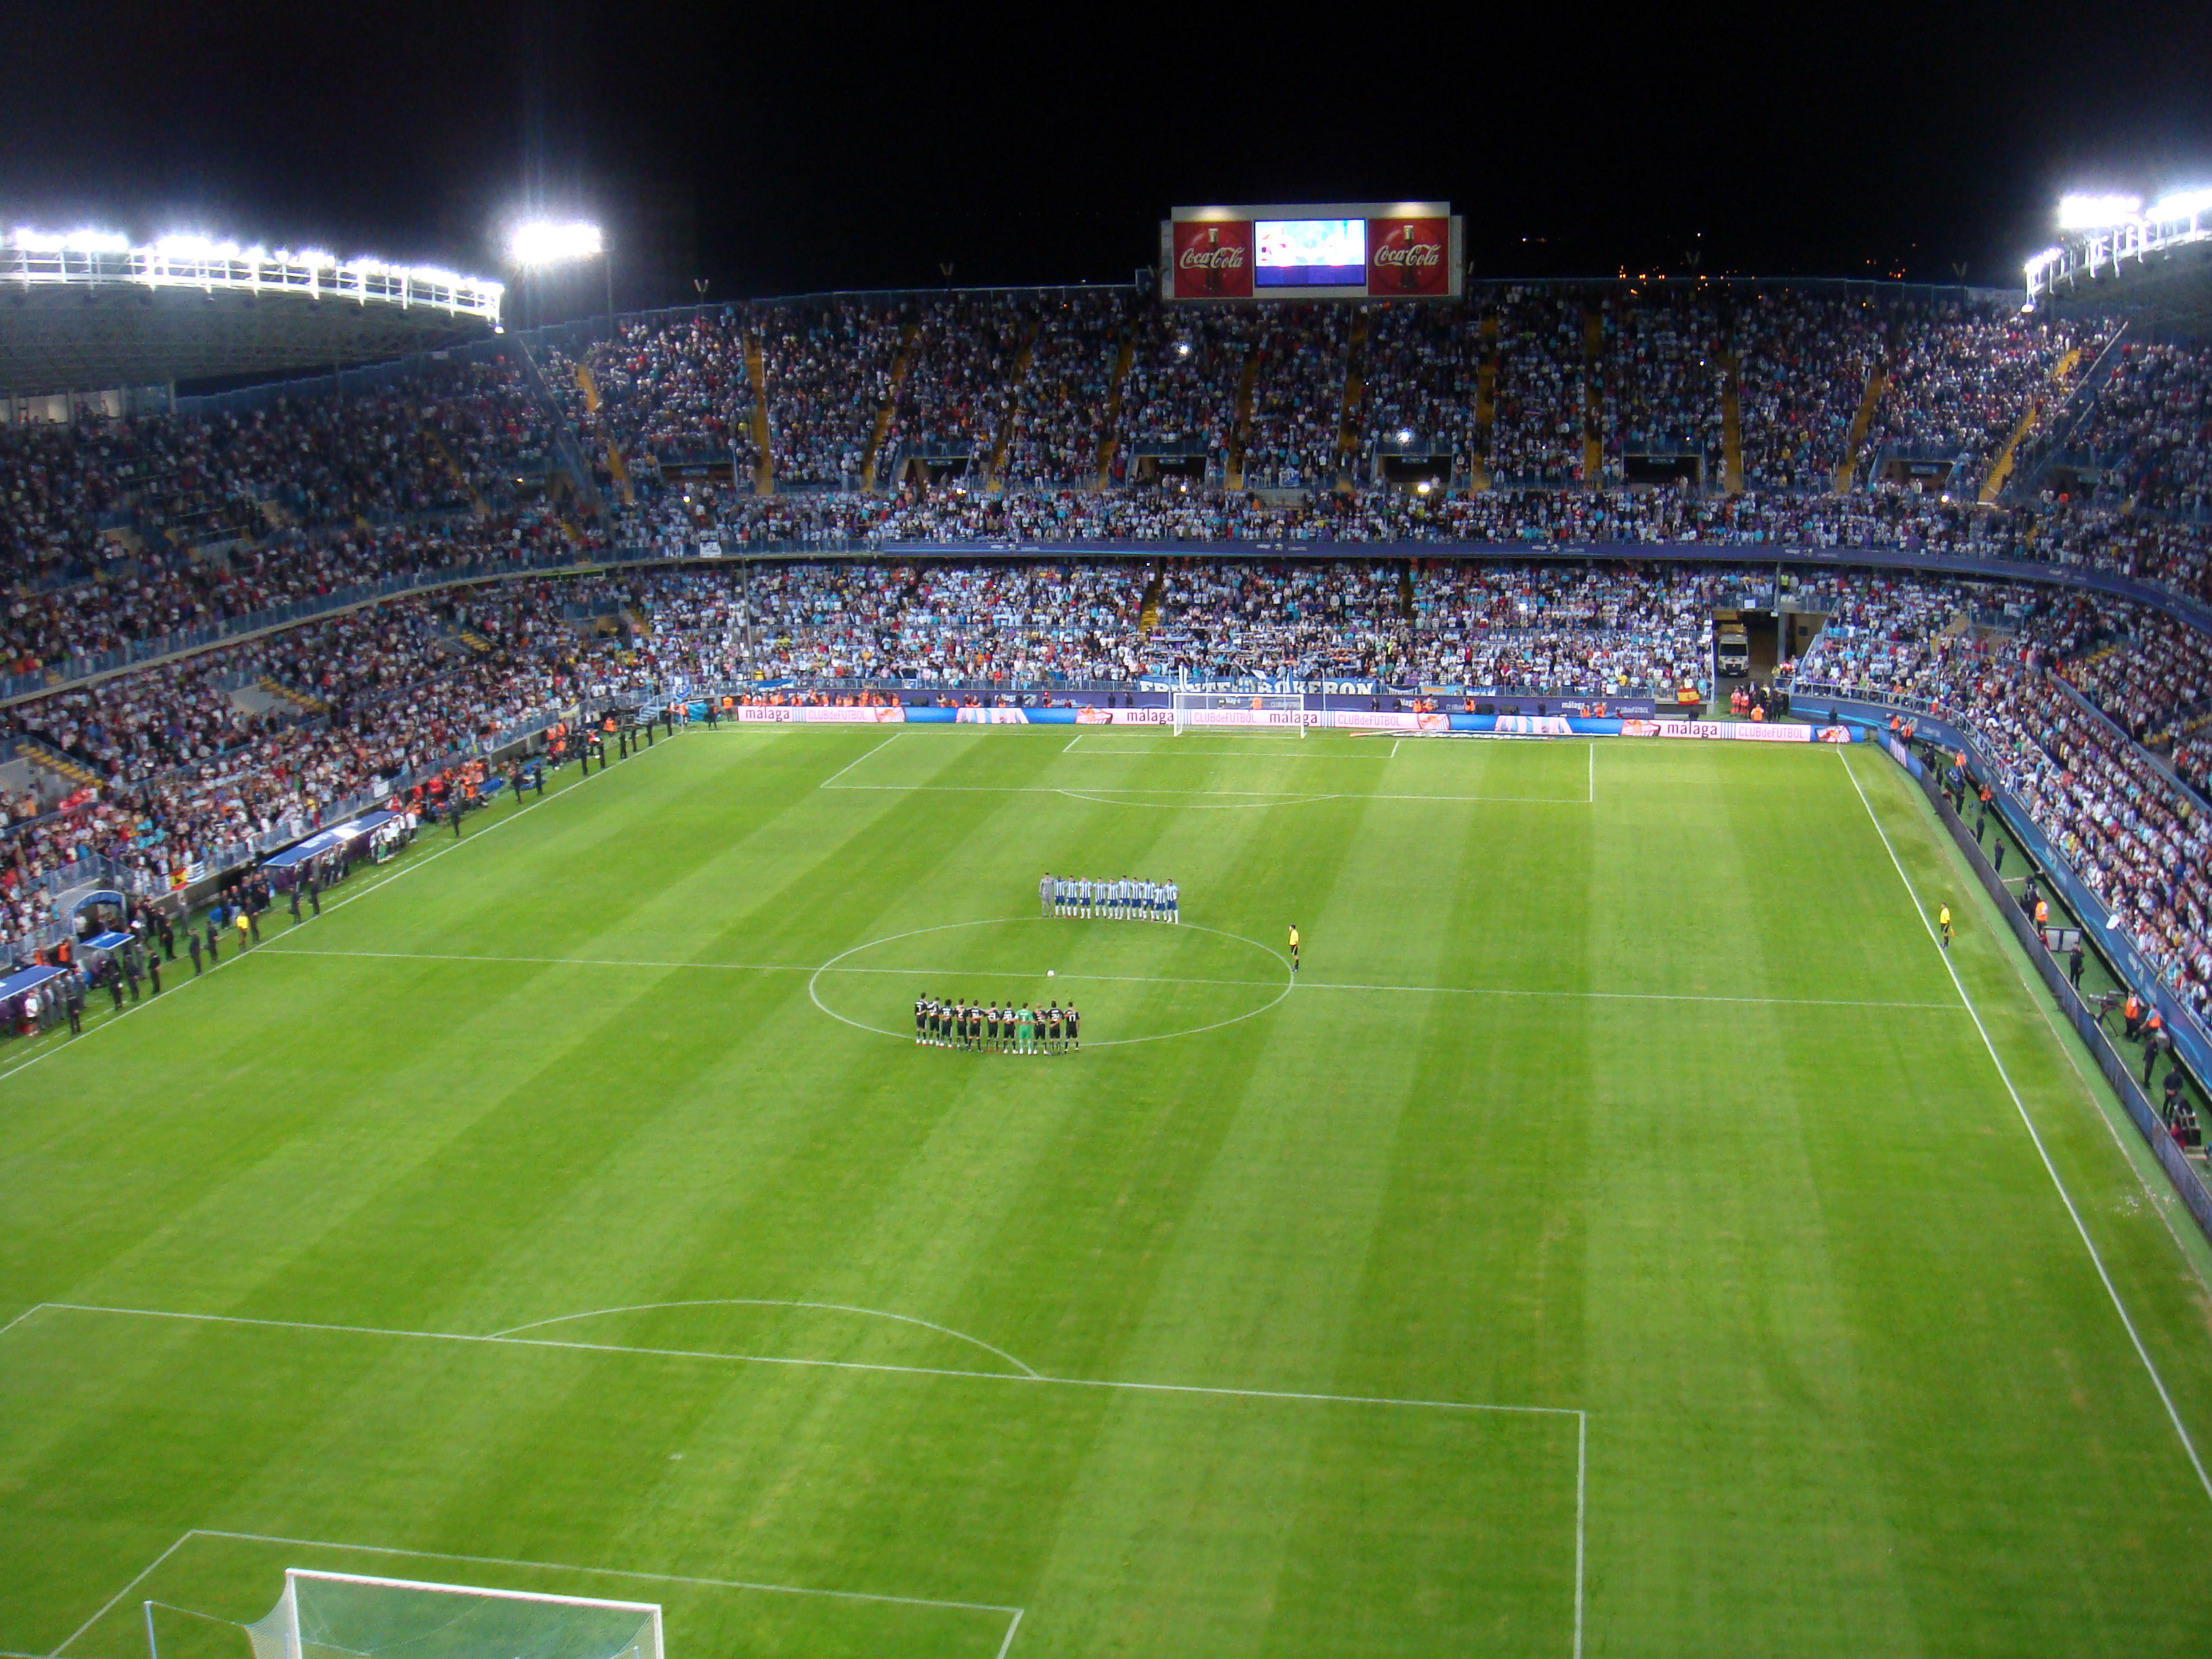 La Rosaleda stadium in Malaga, Spain image - Free stock ...